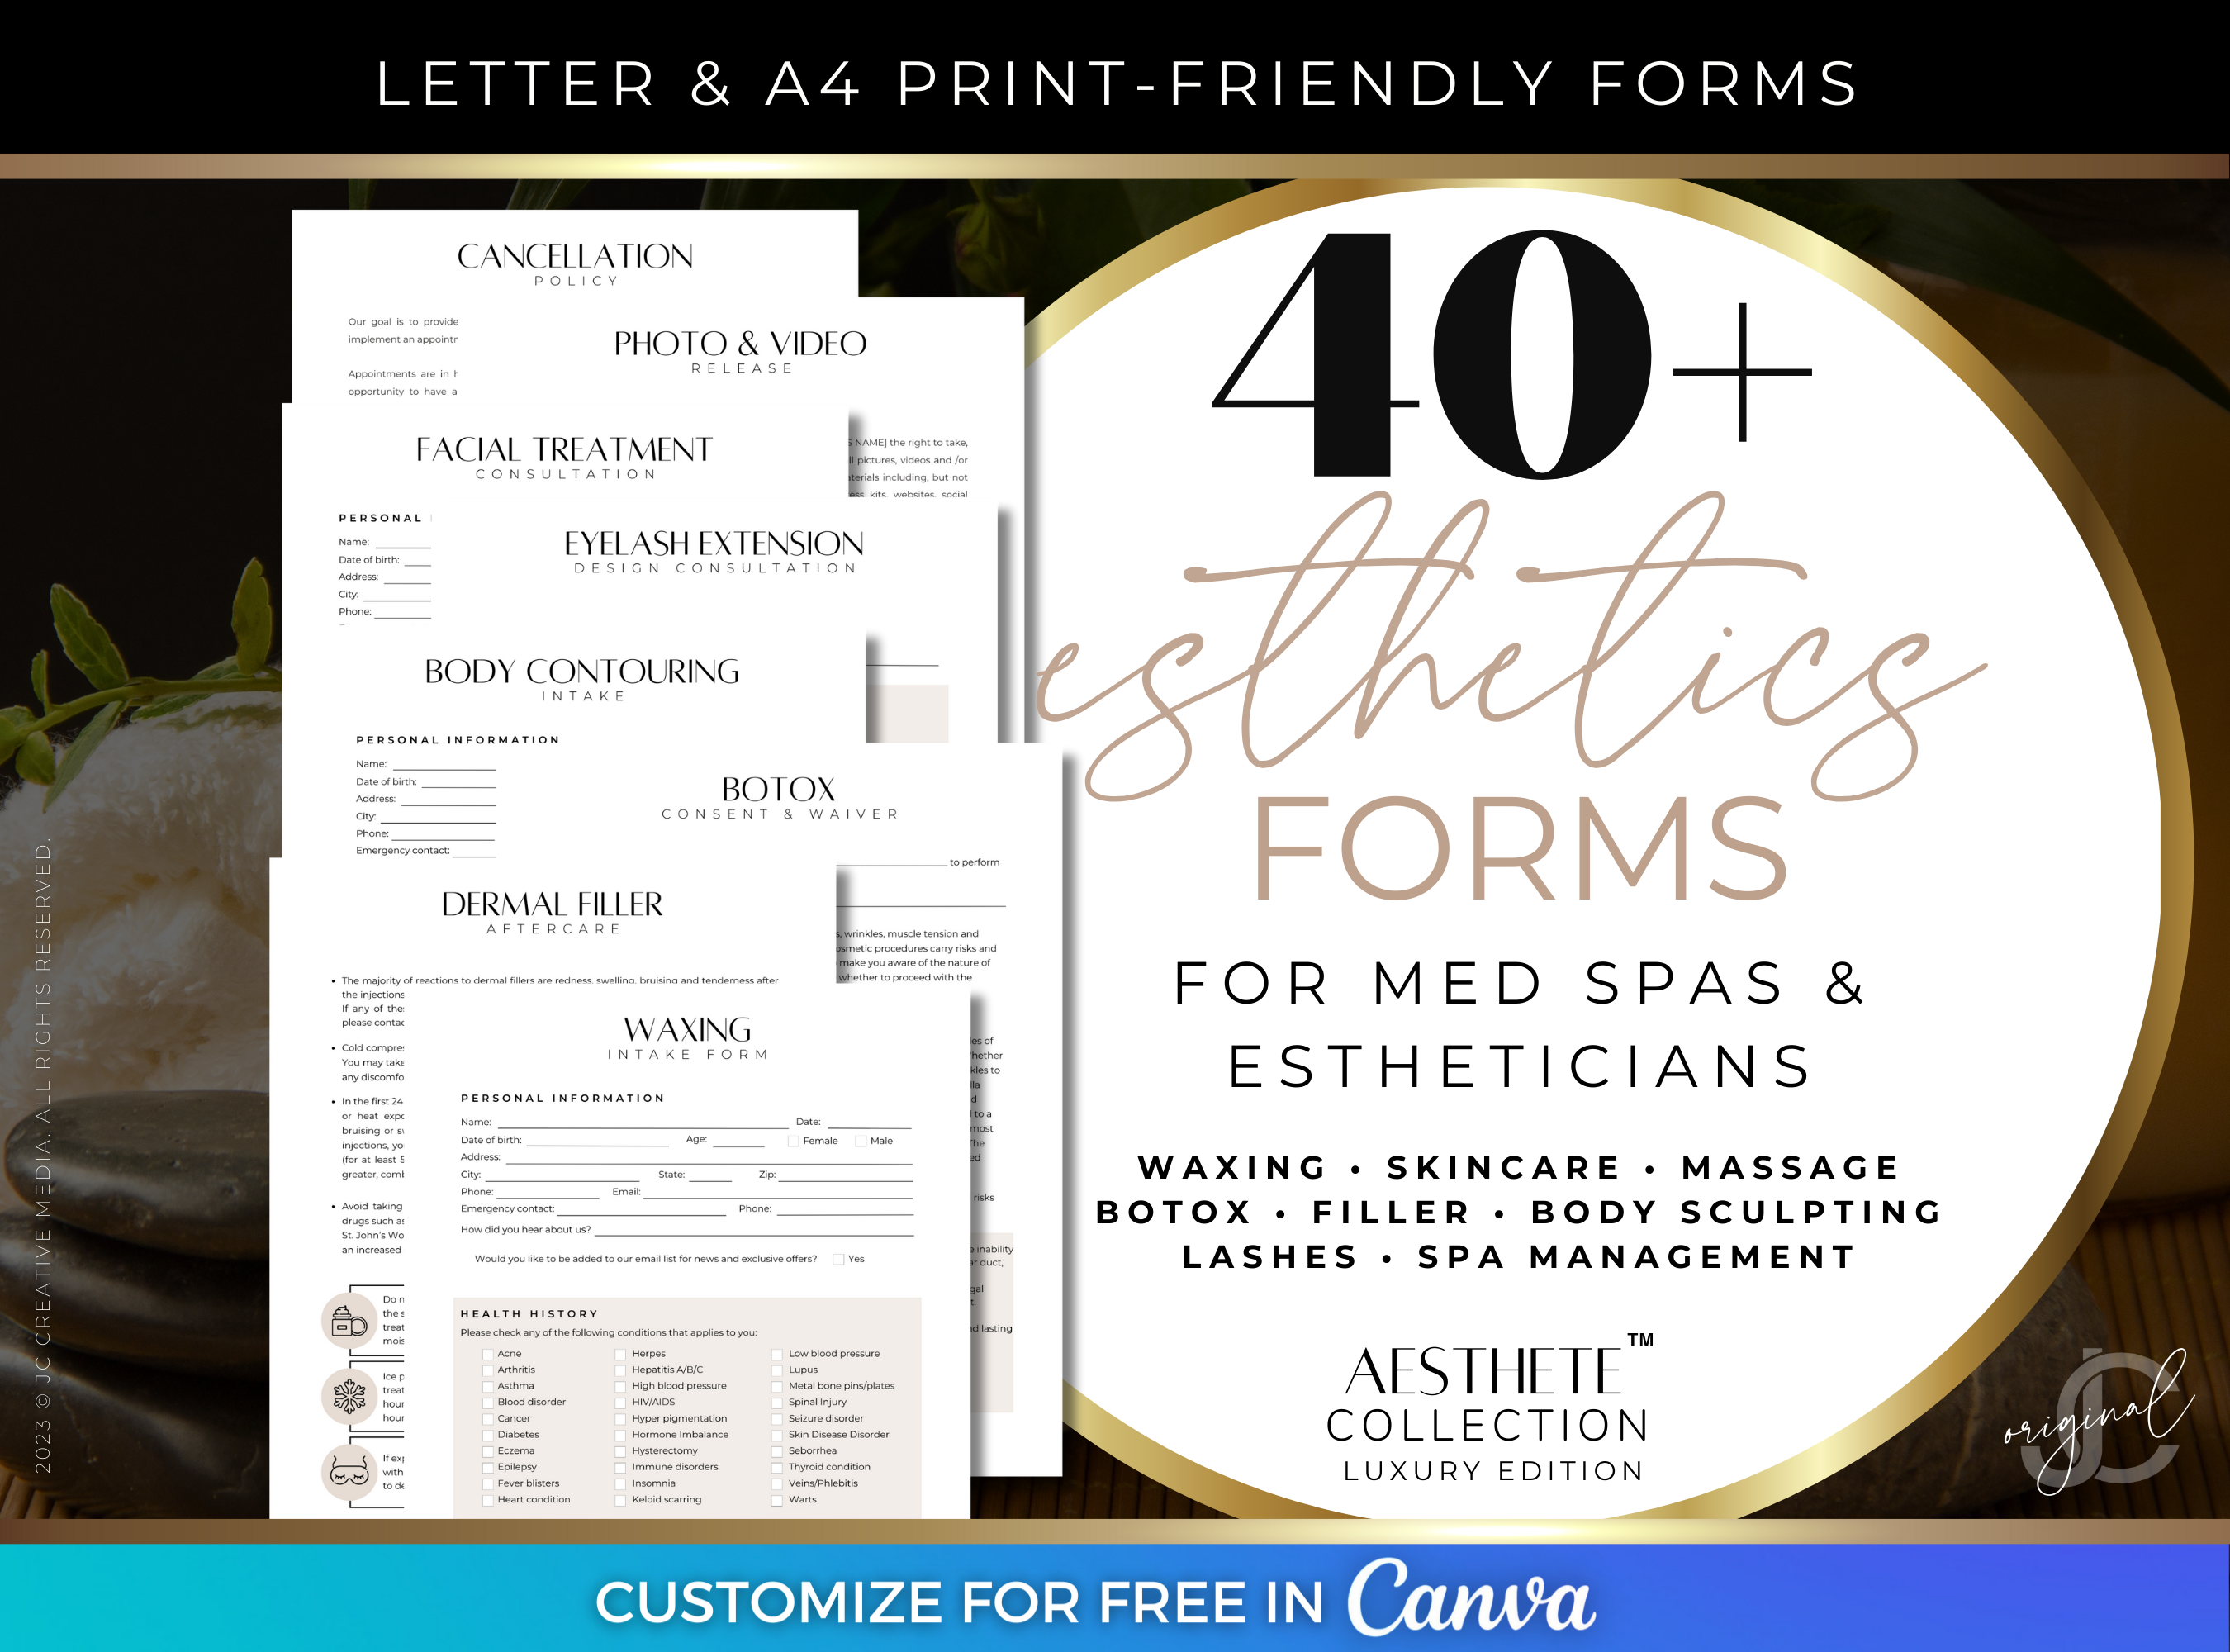 Esthetics Forms for Estheticians & Med Spas (Canva Templates) | Aesthete Collection™ Luxury Edition